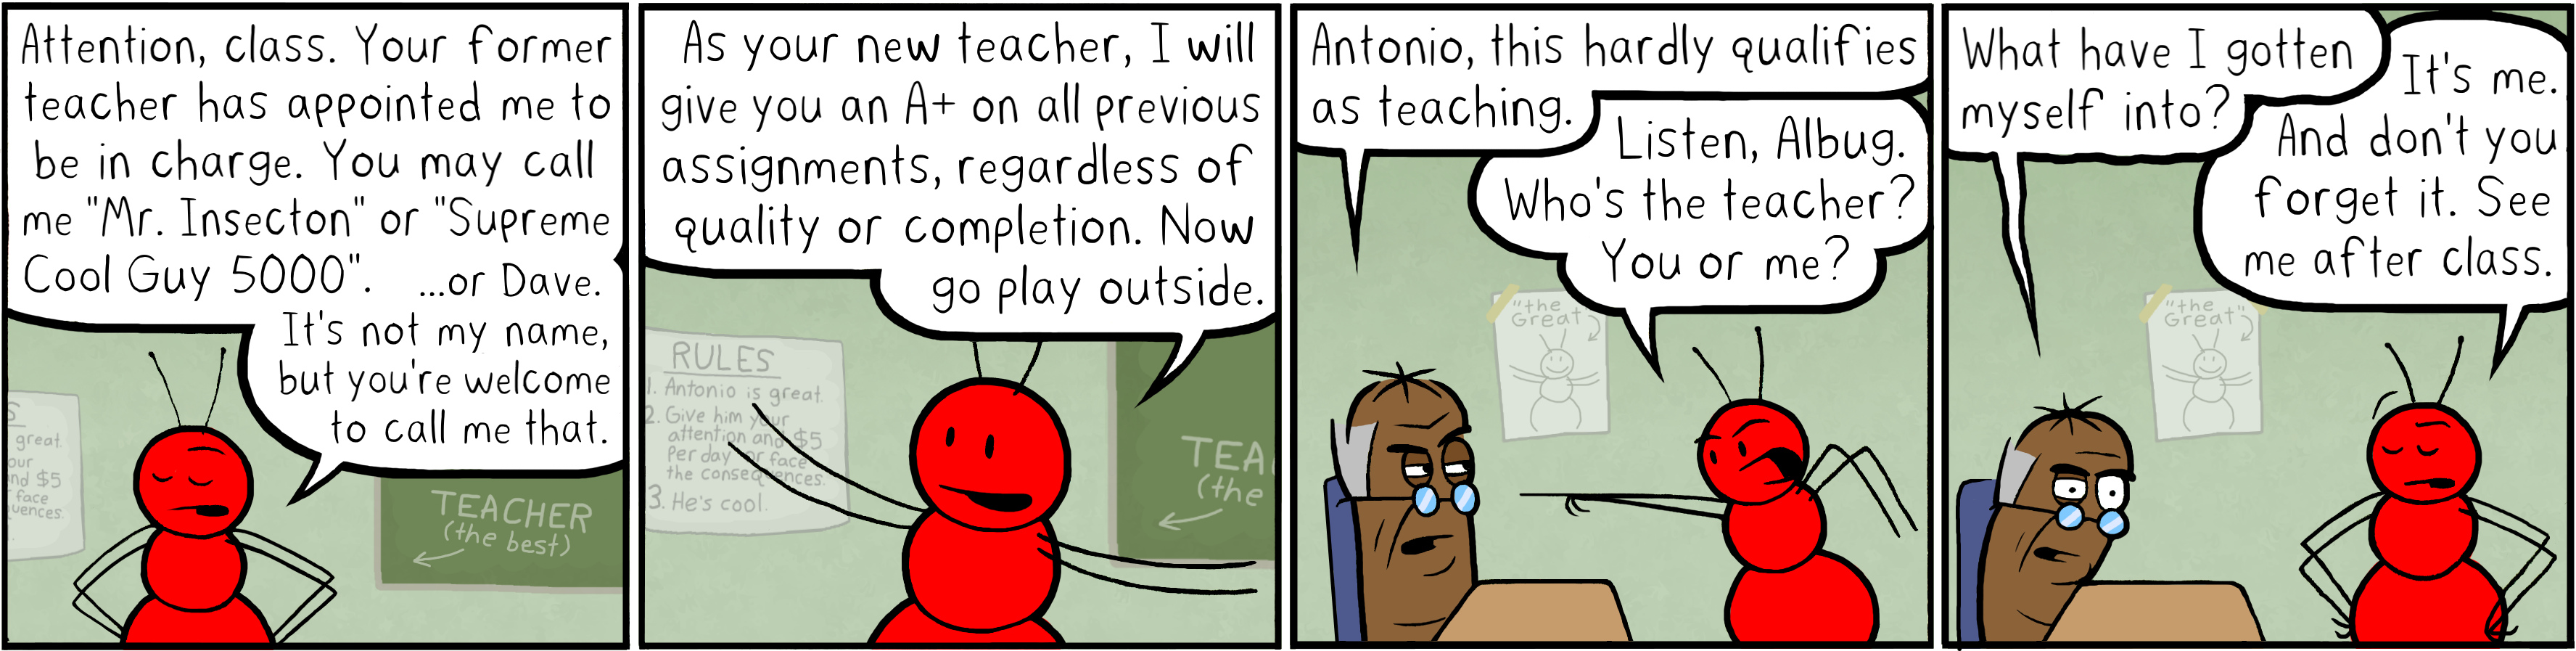 Teacher 2